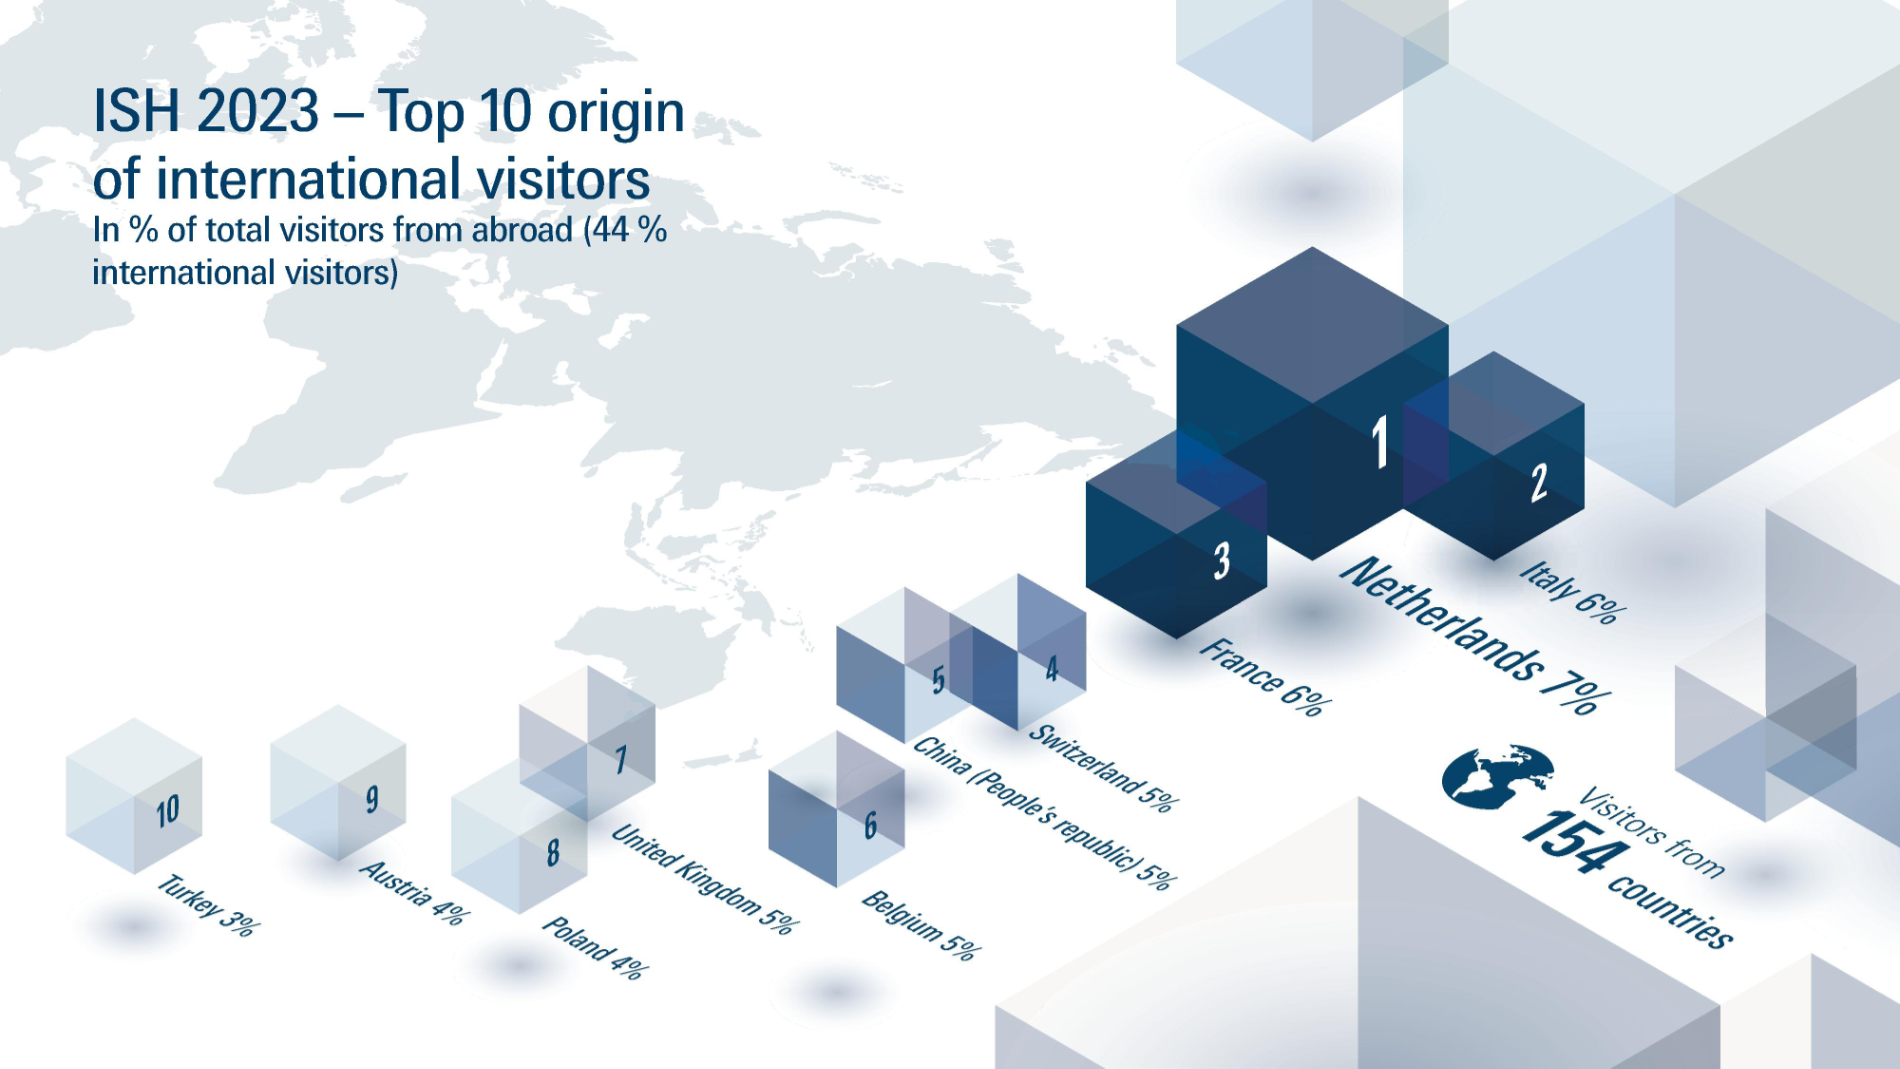 Graphic: Top 10 origin of international visitors